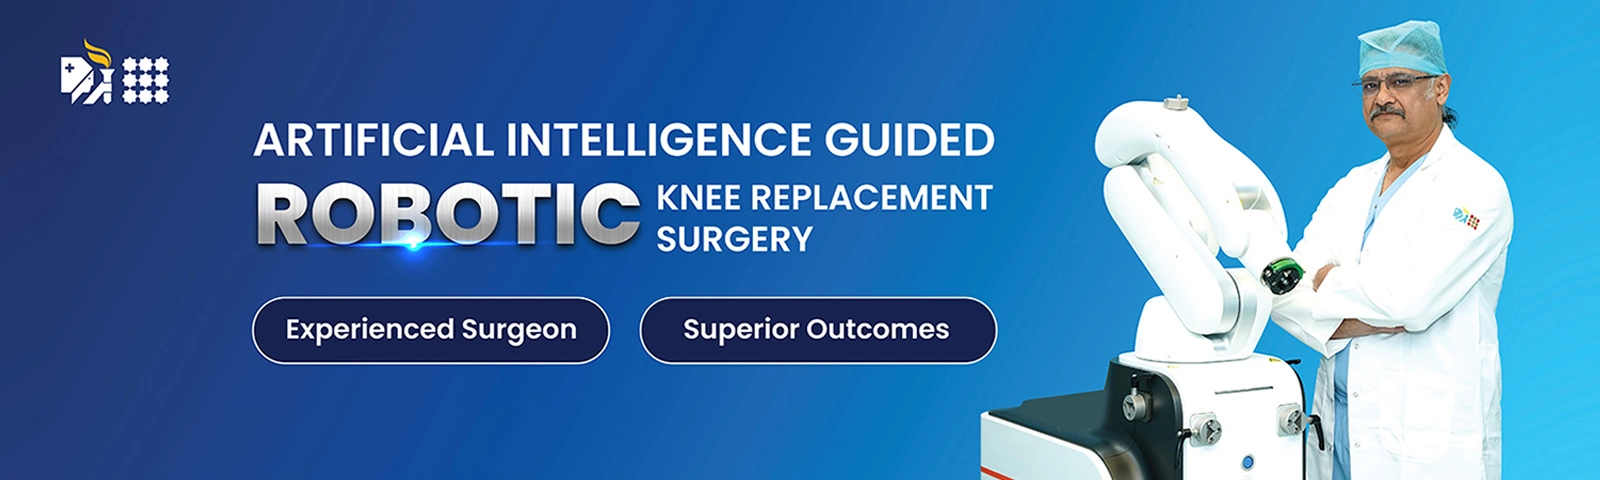 AI-Robotic-Knee-Replacement-Surgery